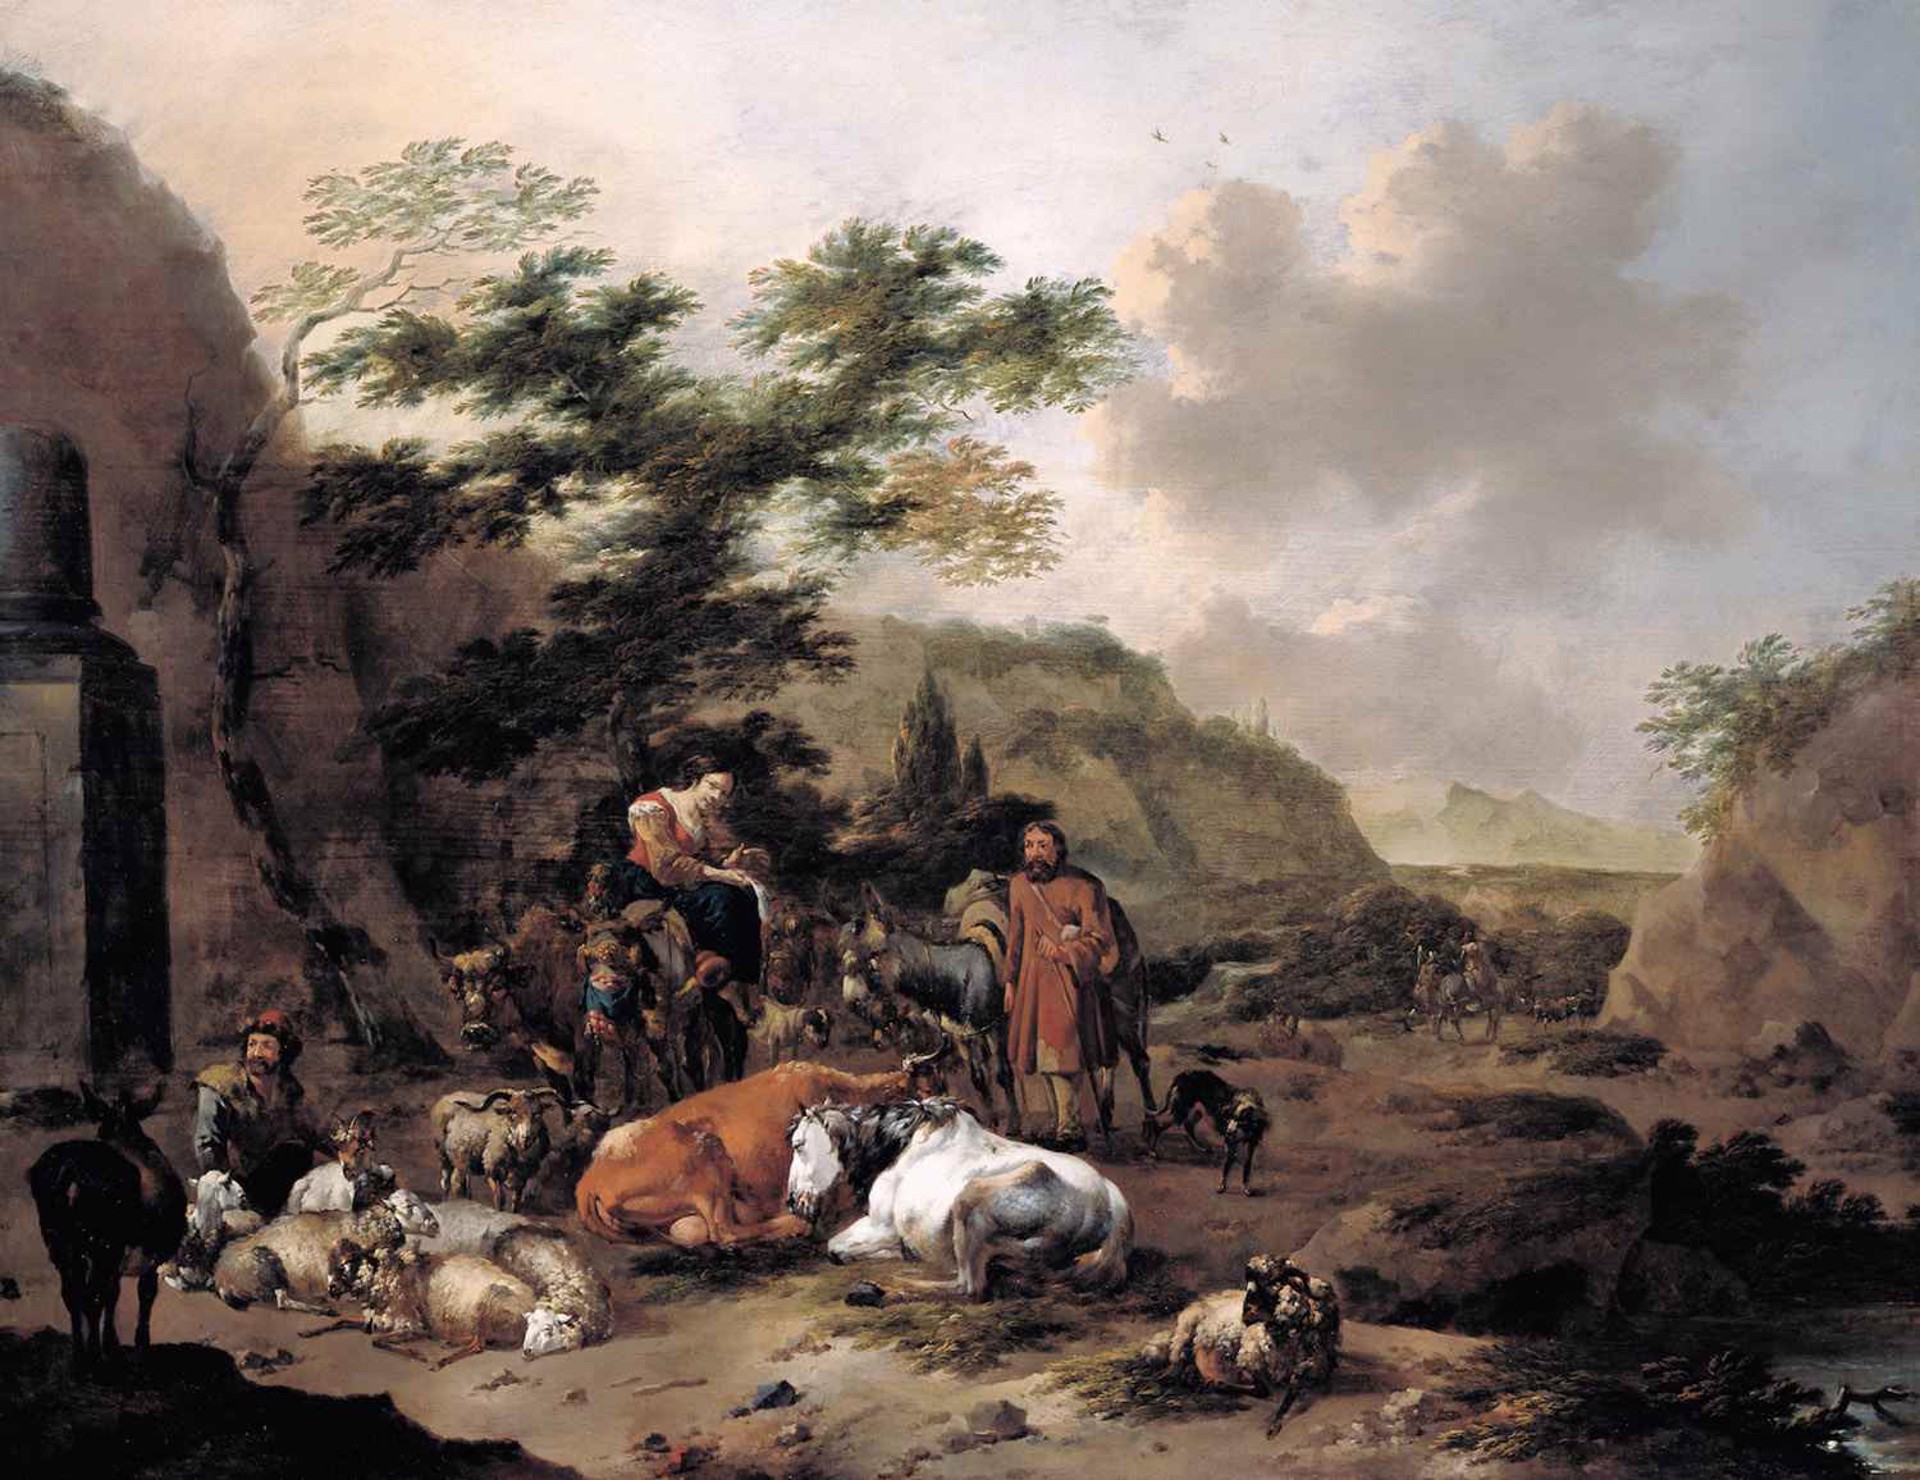 Shepherds with their Flocks in a Hilly Landscape by Jan Frans Soolmaker